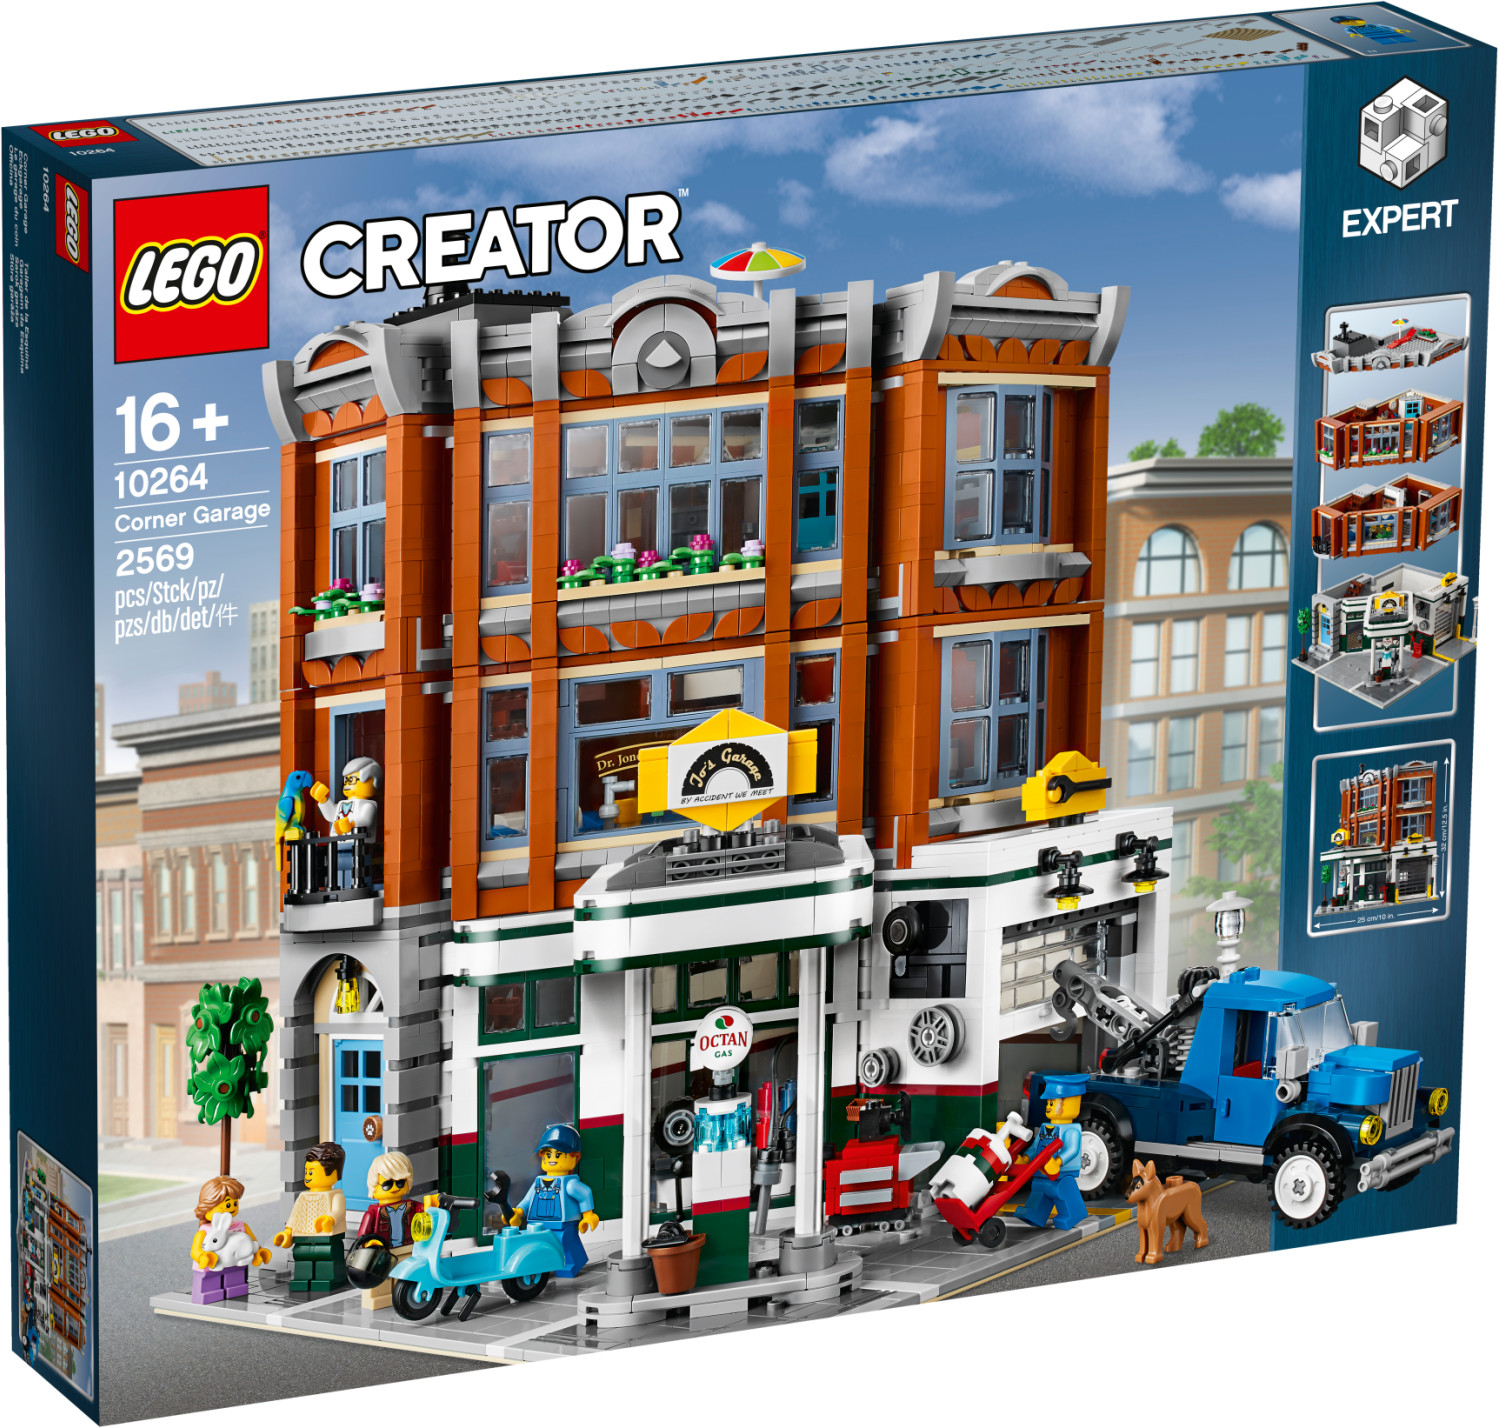 LEGO Creator Expert - Officina (10264) a € 295,00 (oggi)